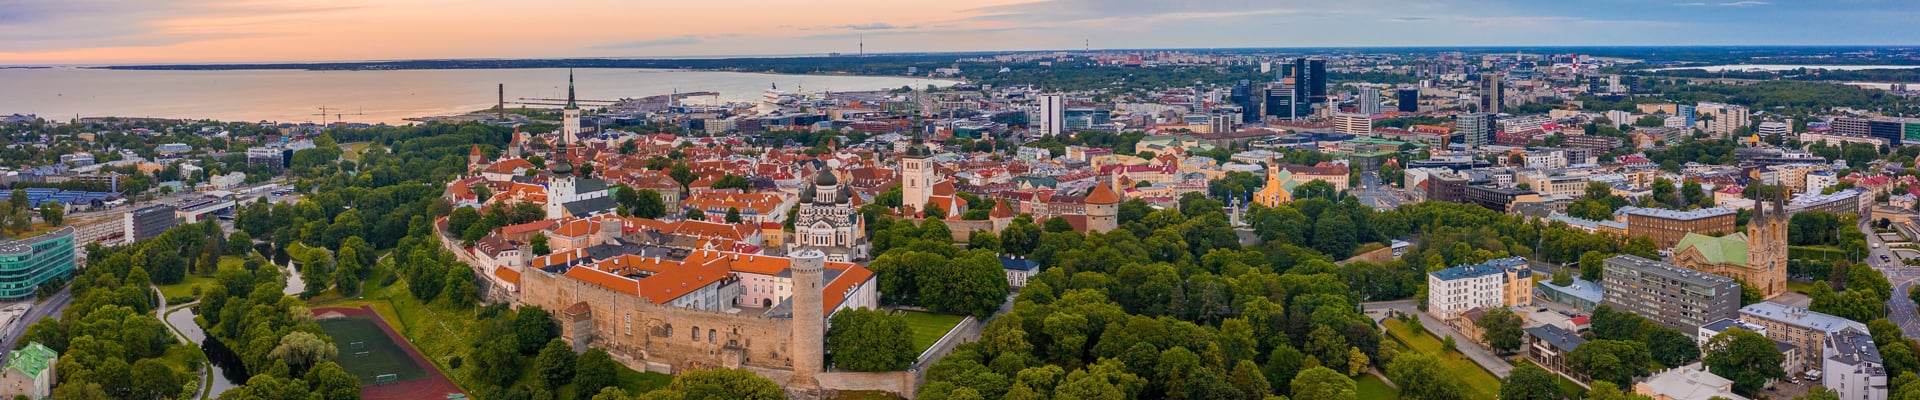 Aerial View of Old Town Tallinn, Estonia